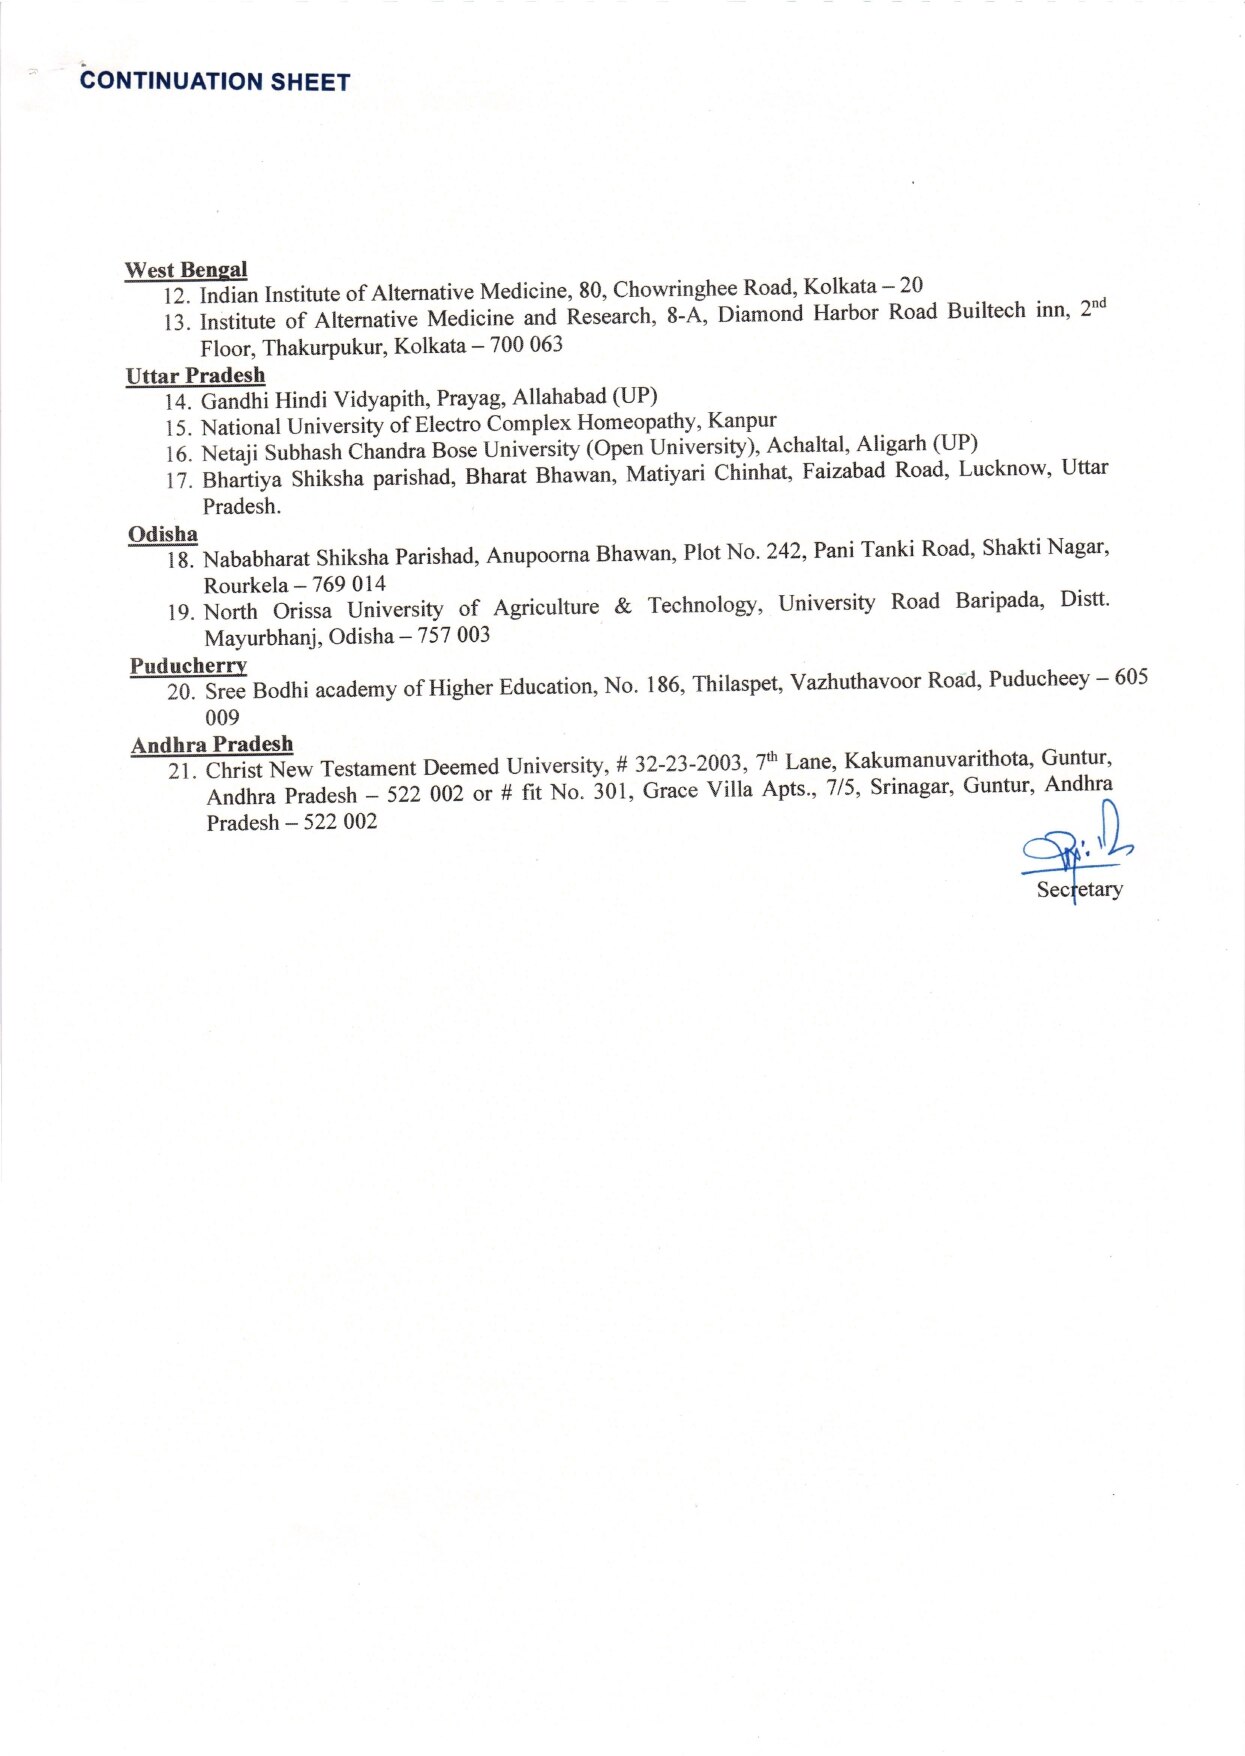 Fake University List By UGC: దేశంలో 21 నకిలీ యూనివర్సిటీలు - జాబితాను విడుదల చేసిన యూజీసీ!